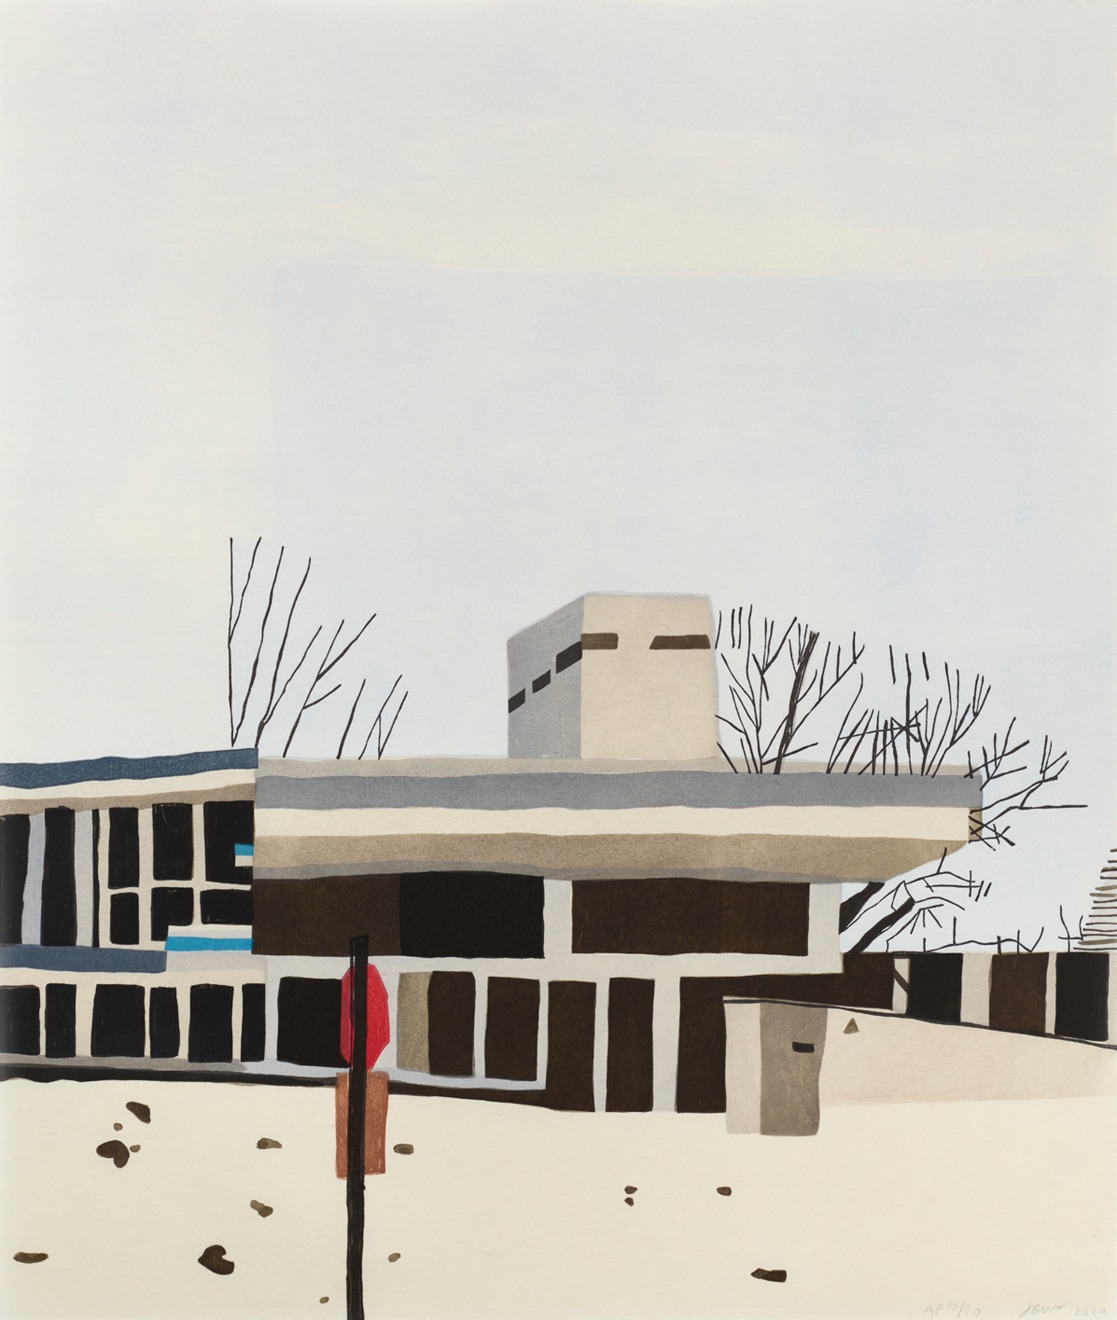 Jonas Wood Four Landscapes (Winter), 2020